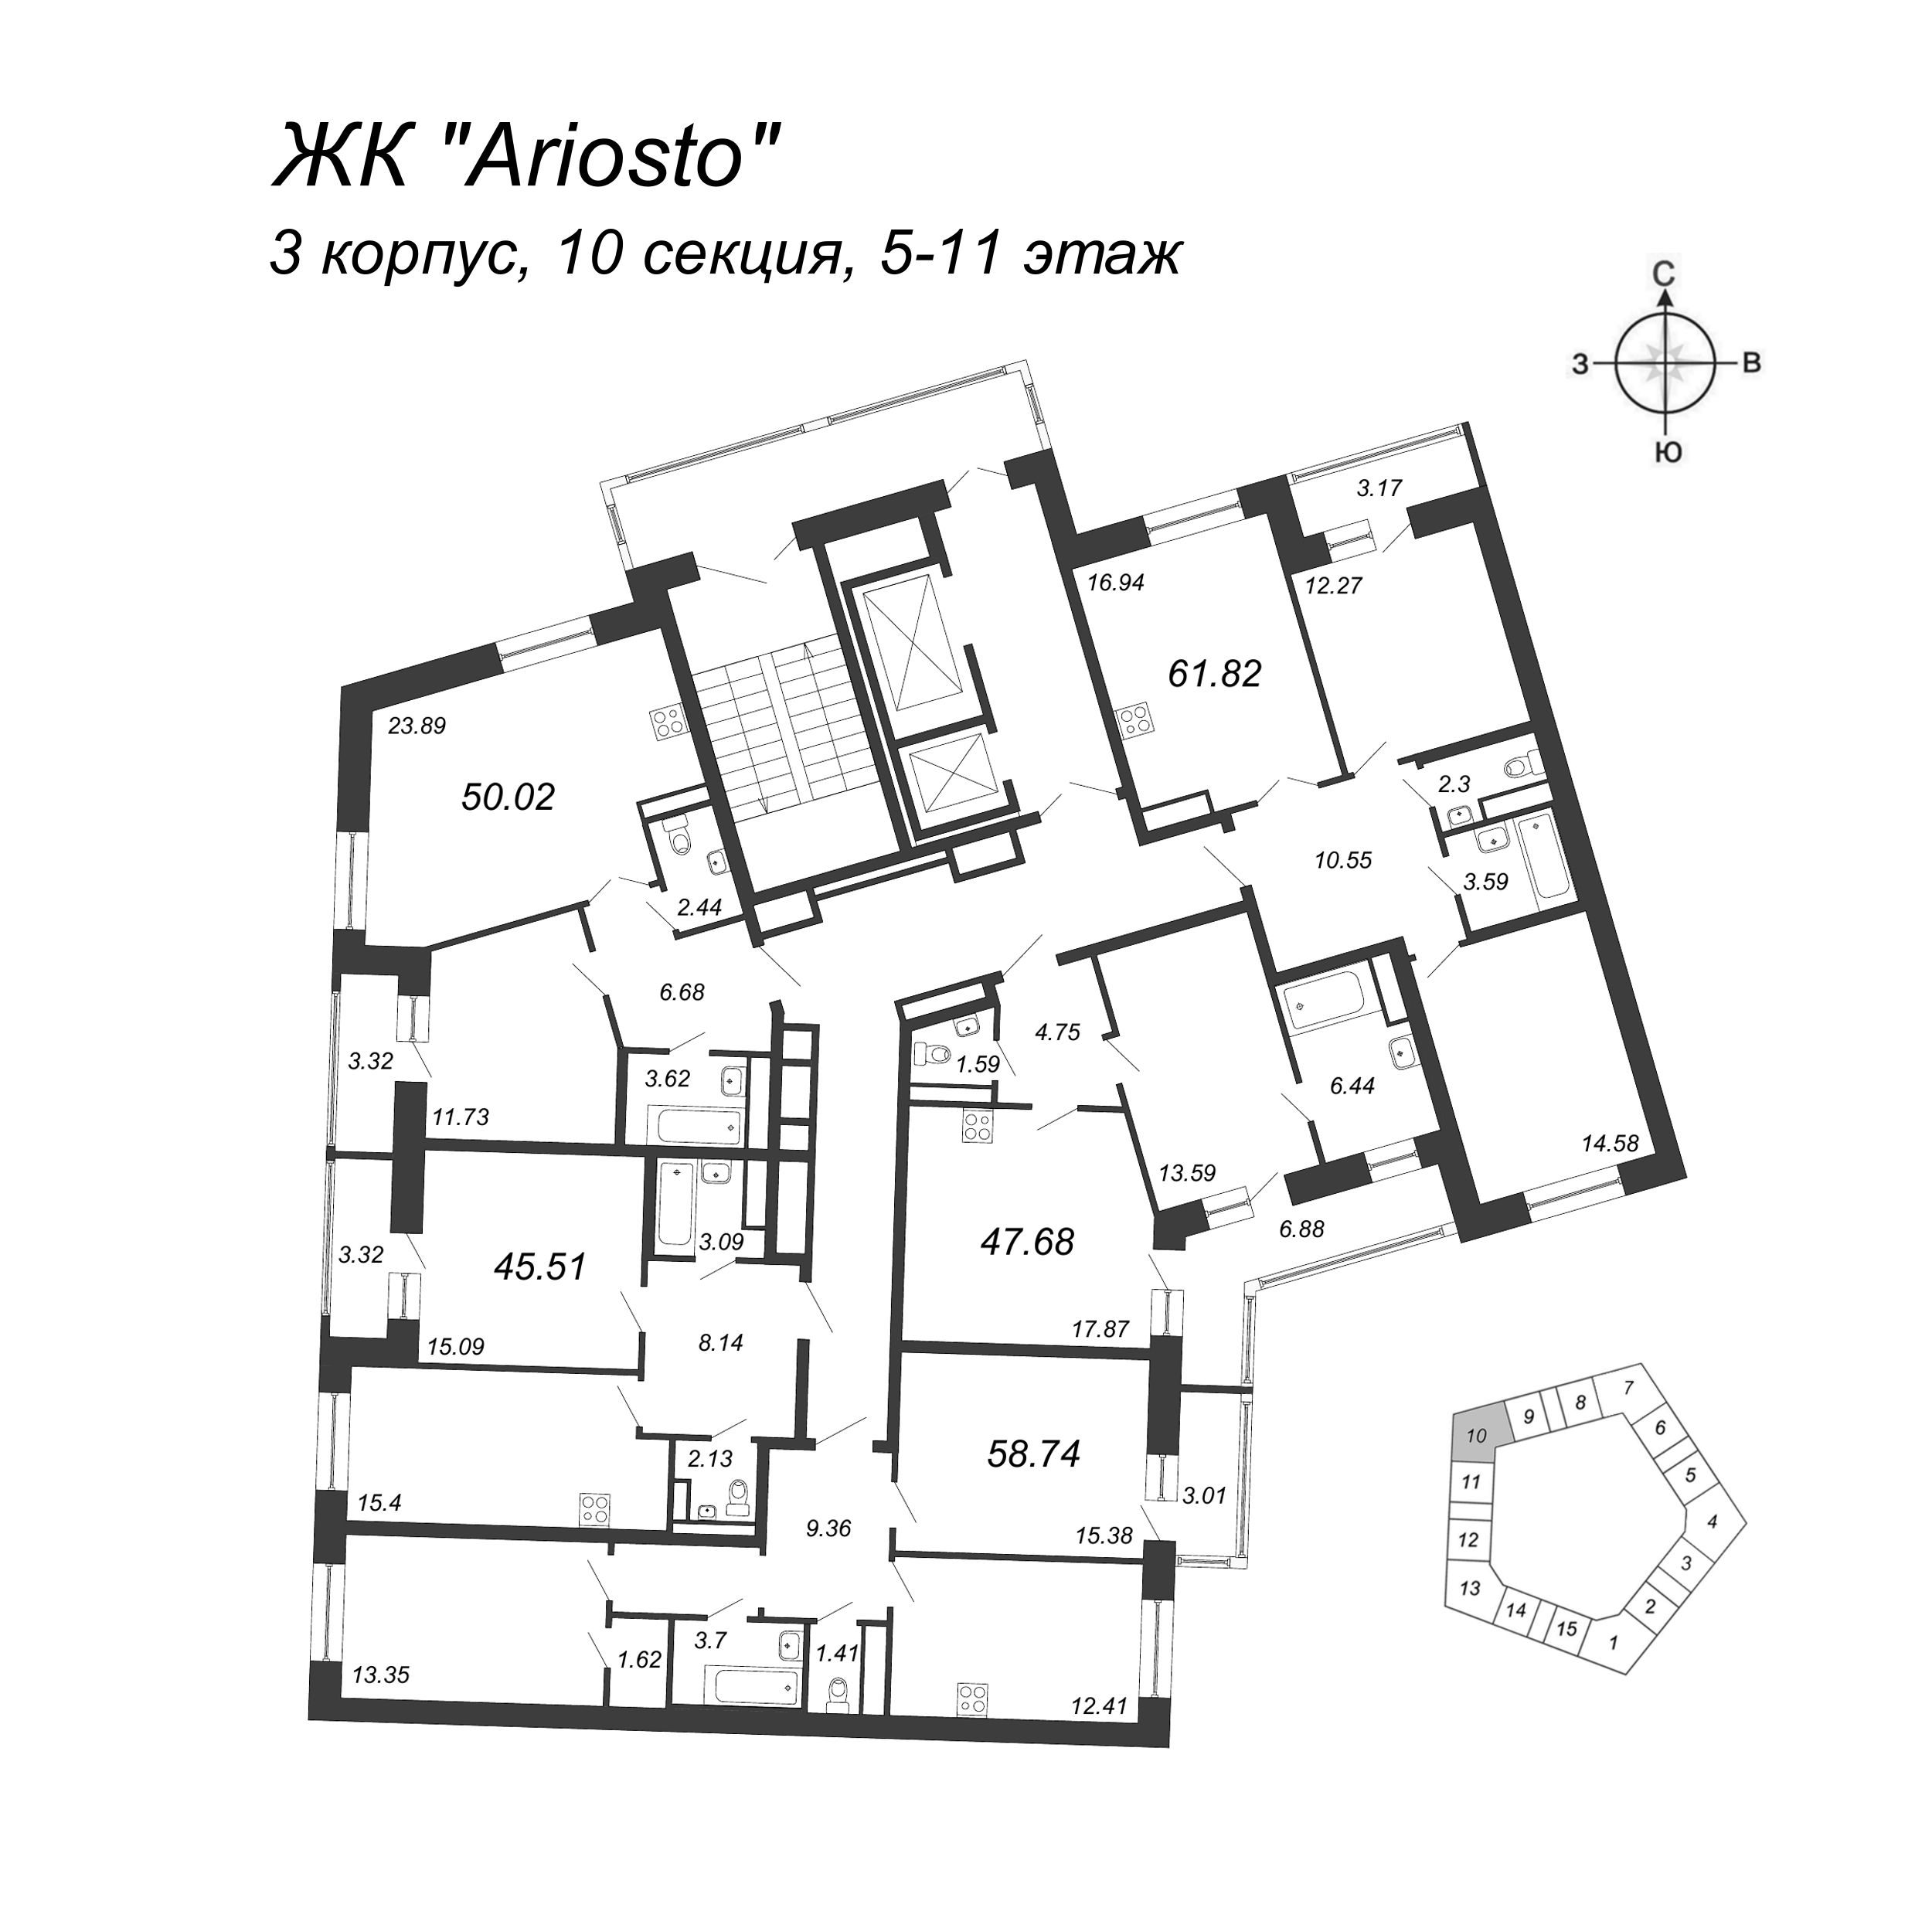 3-комнатная (Евро) квартира, 61.82 м² - планировка этажа